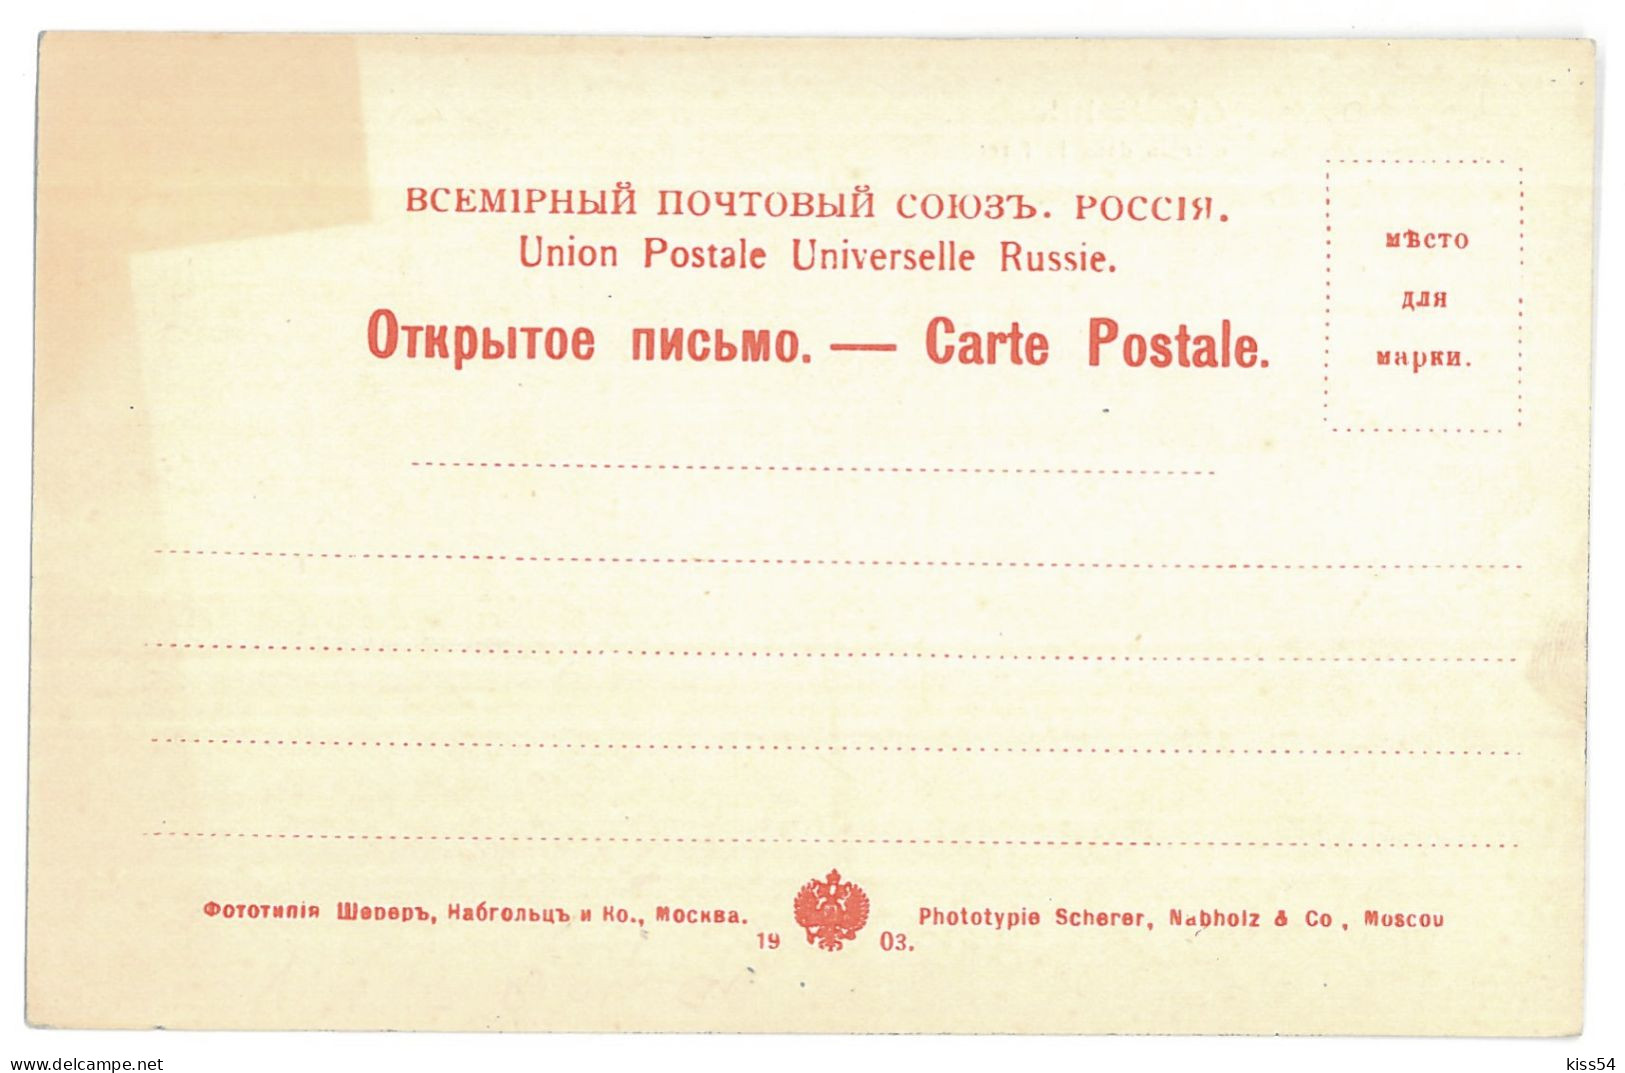 RUS 996 - 15458 TRAIN On Railway In SIBERIA, Russia - Old Postcard - Unused - Russia